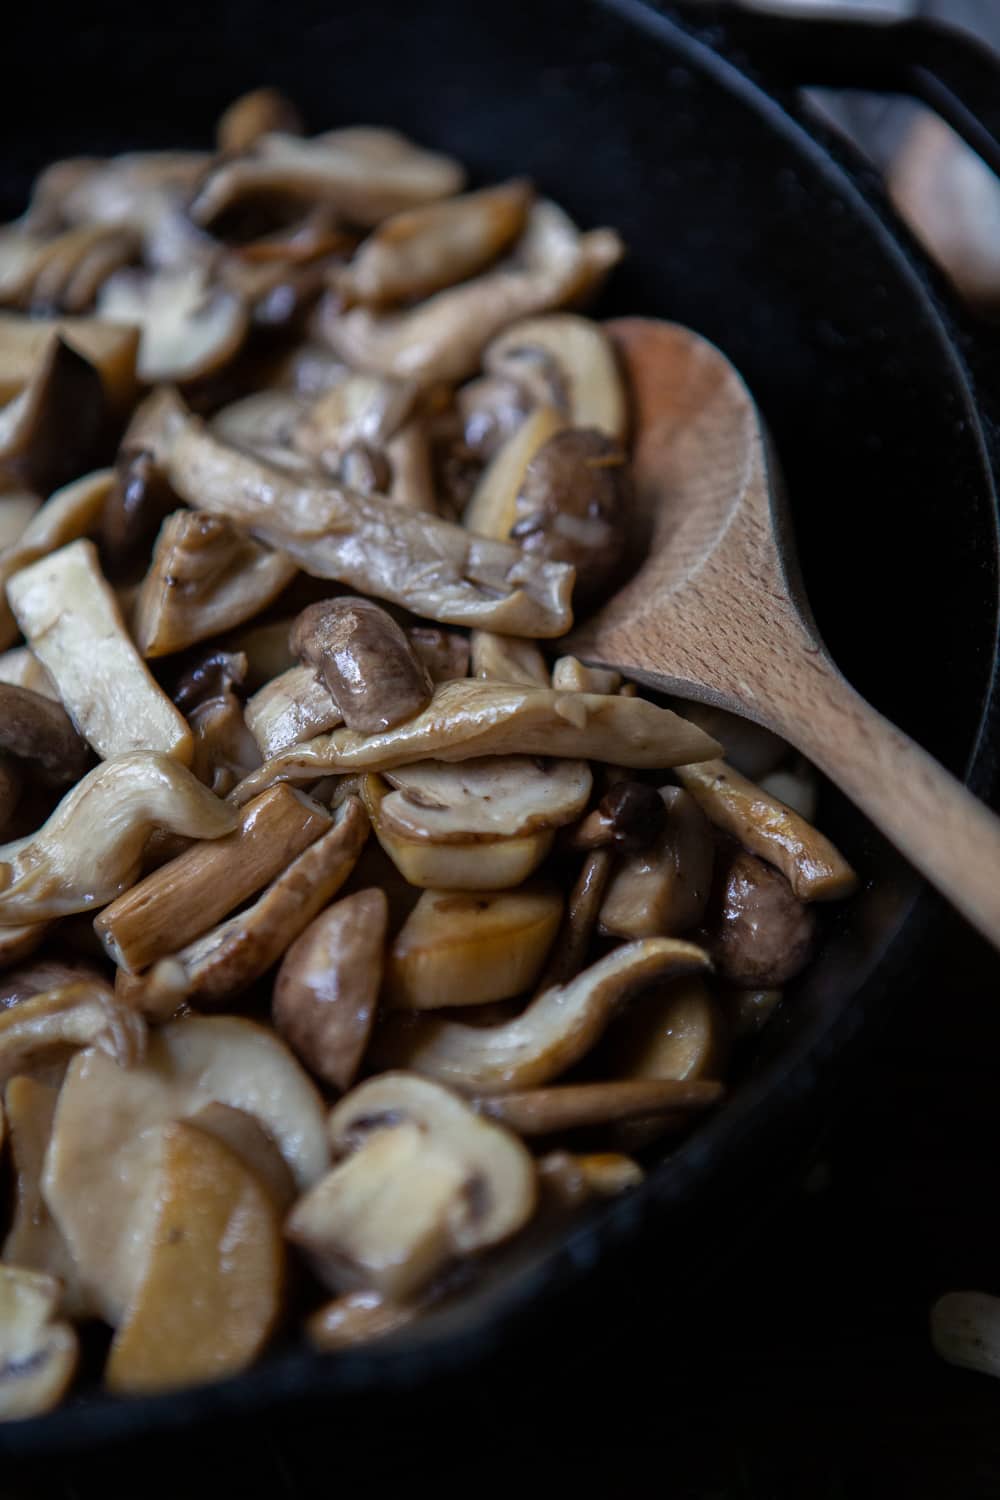 Cooking down mushrooms in a pan